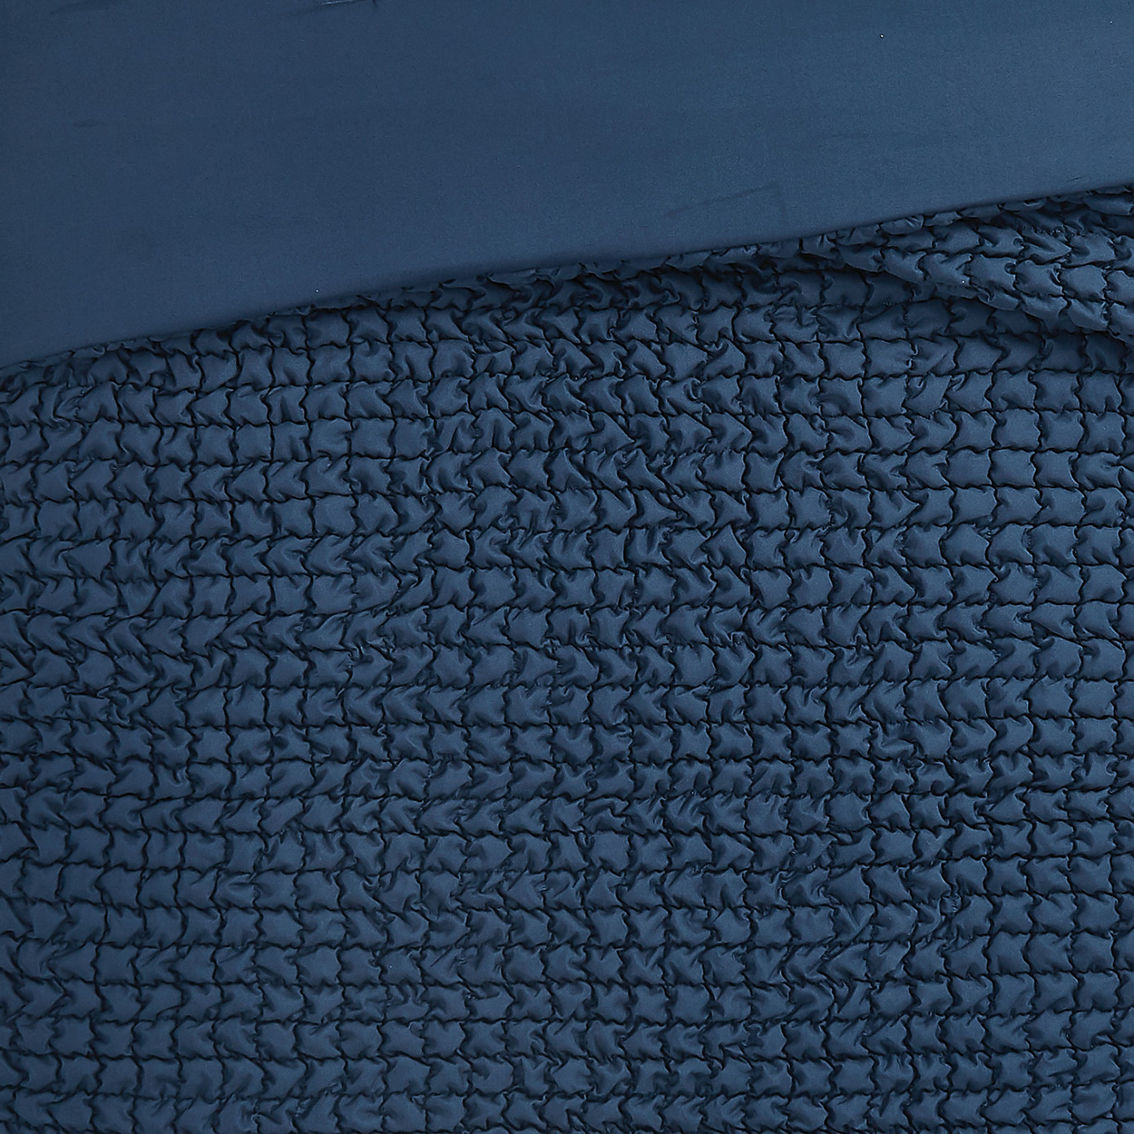 Christian Siriano NY Textured Puff Comforter Set - Image 4 of 4